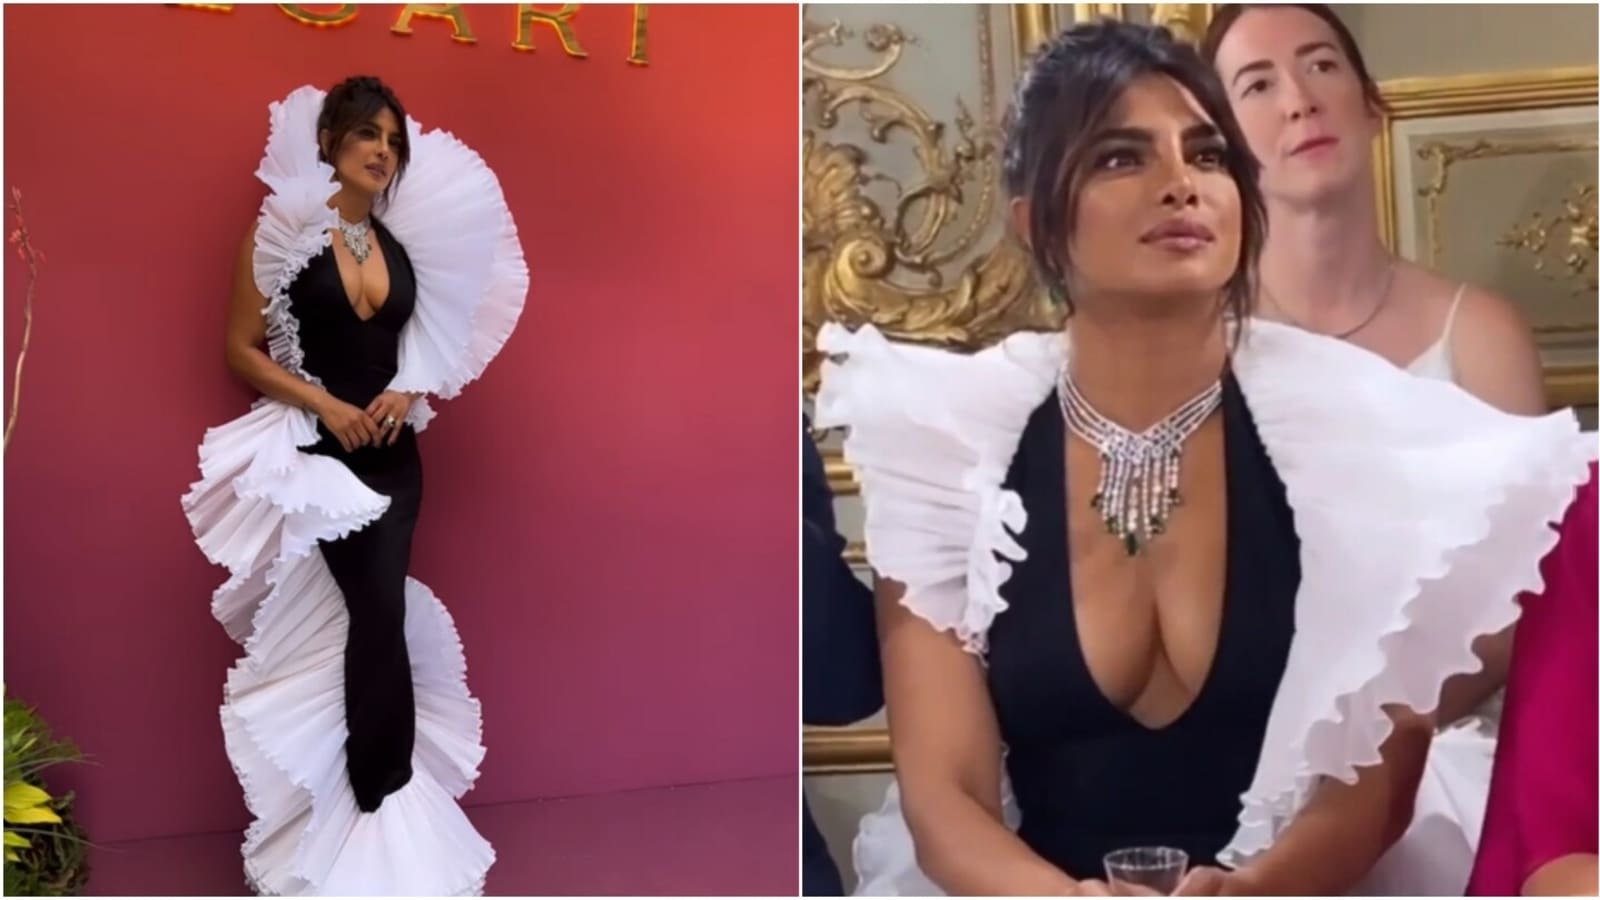 Priyanka Chopra Ki Sexy Video - Priyanka Chopra attends Bulgari event in bold gown; makes Jameela Jamil  gasp | Bollywood - Hindustan Times